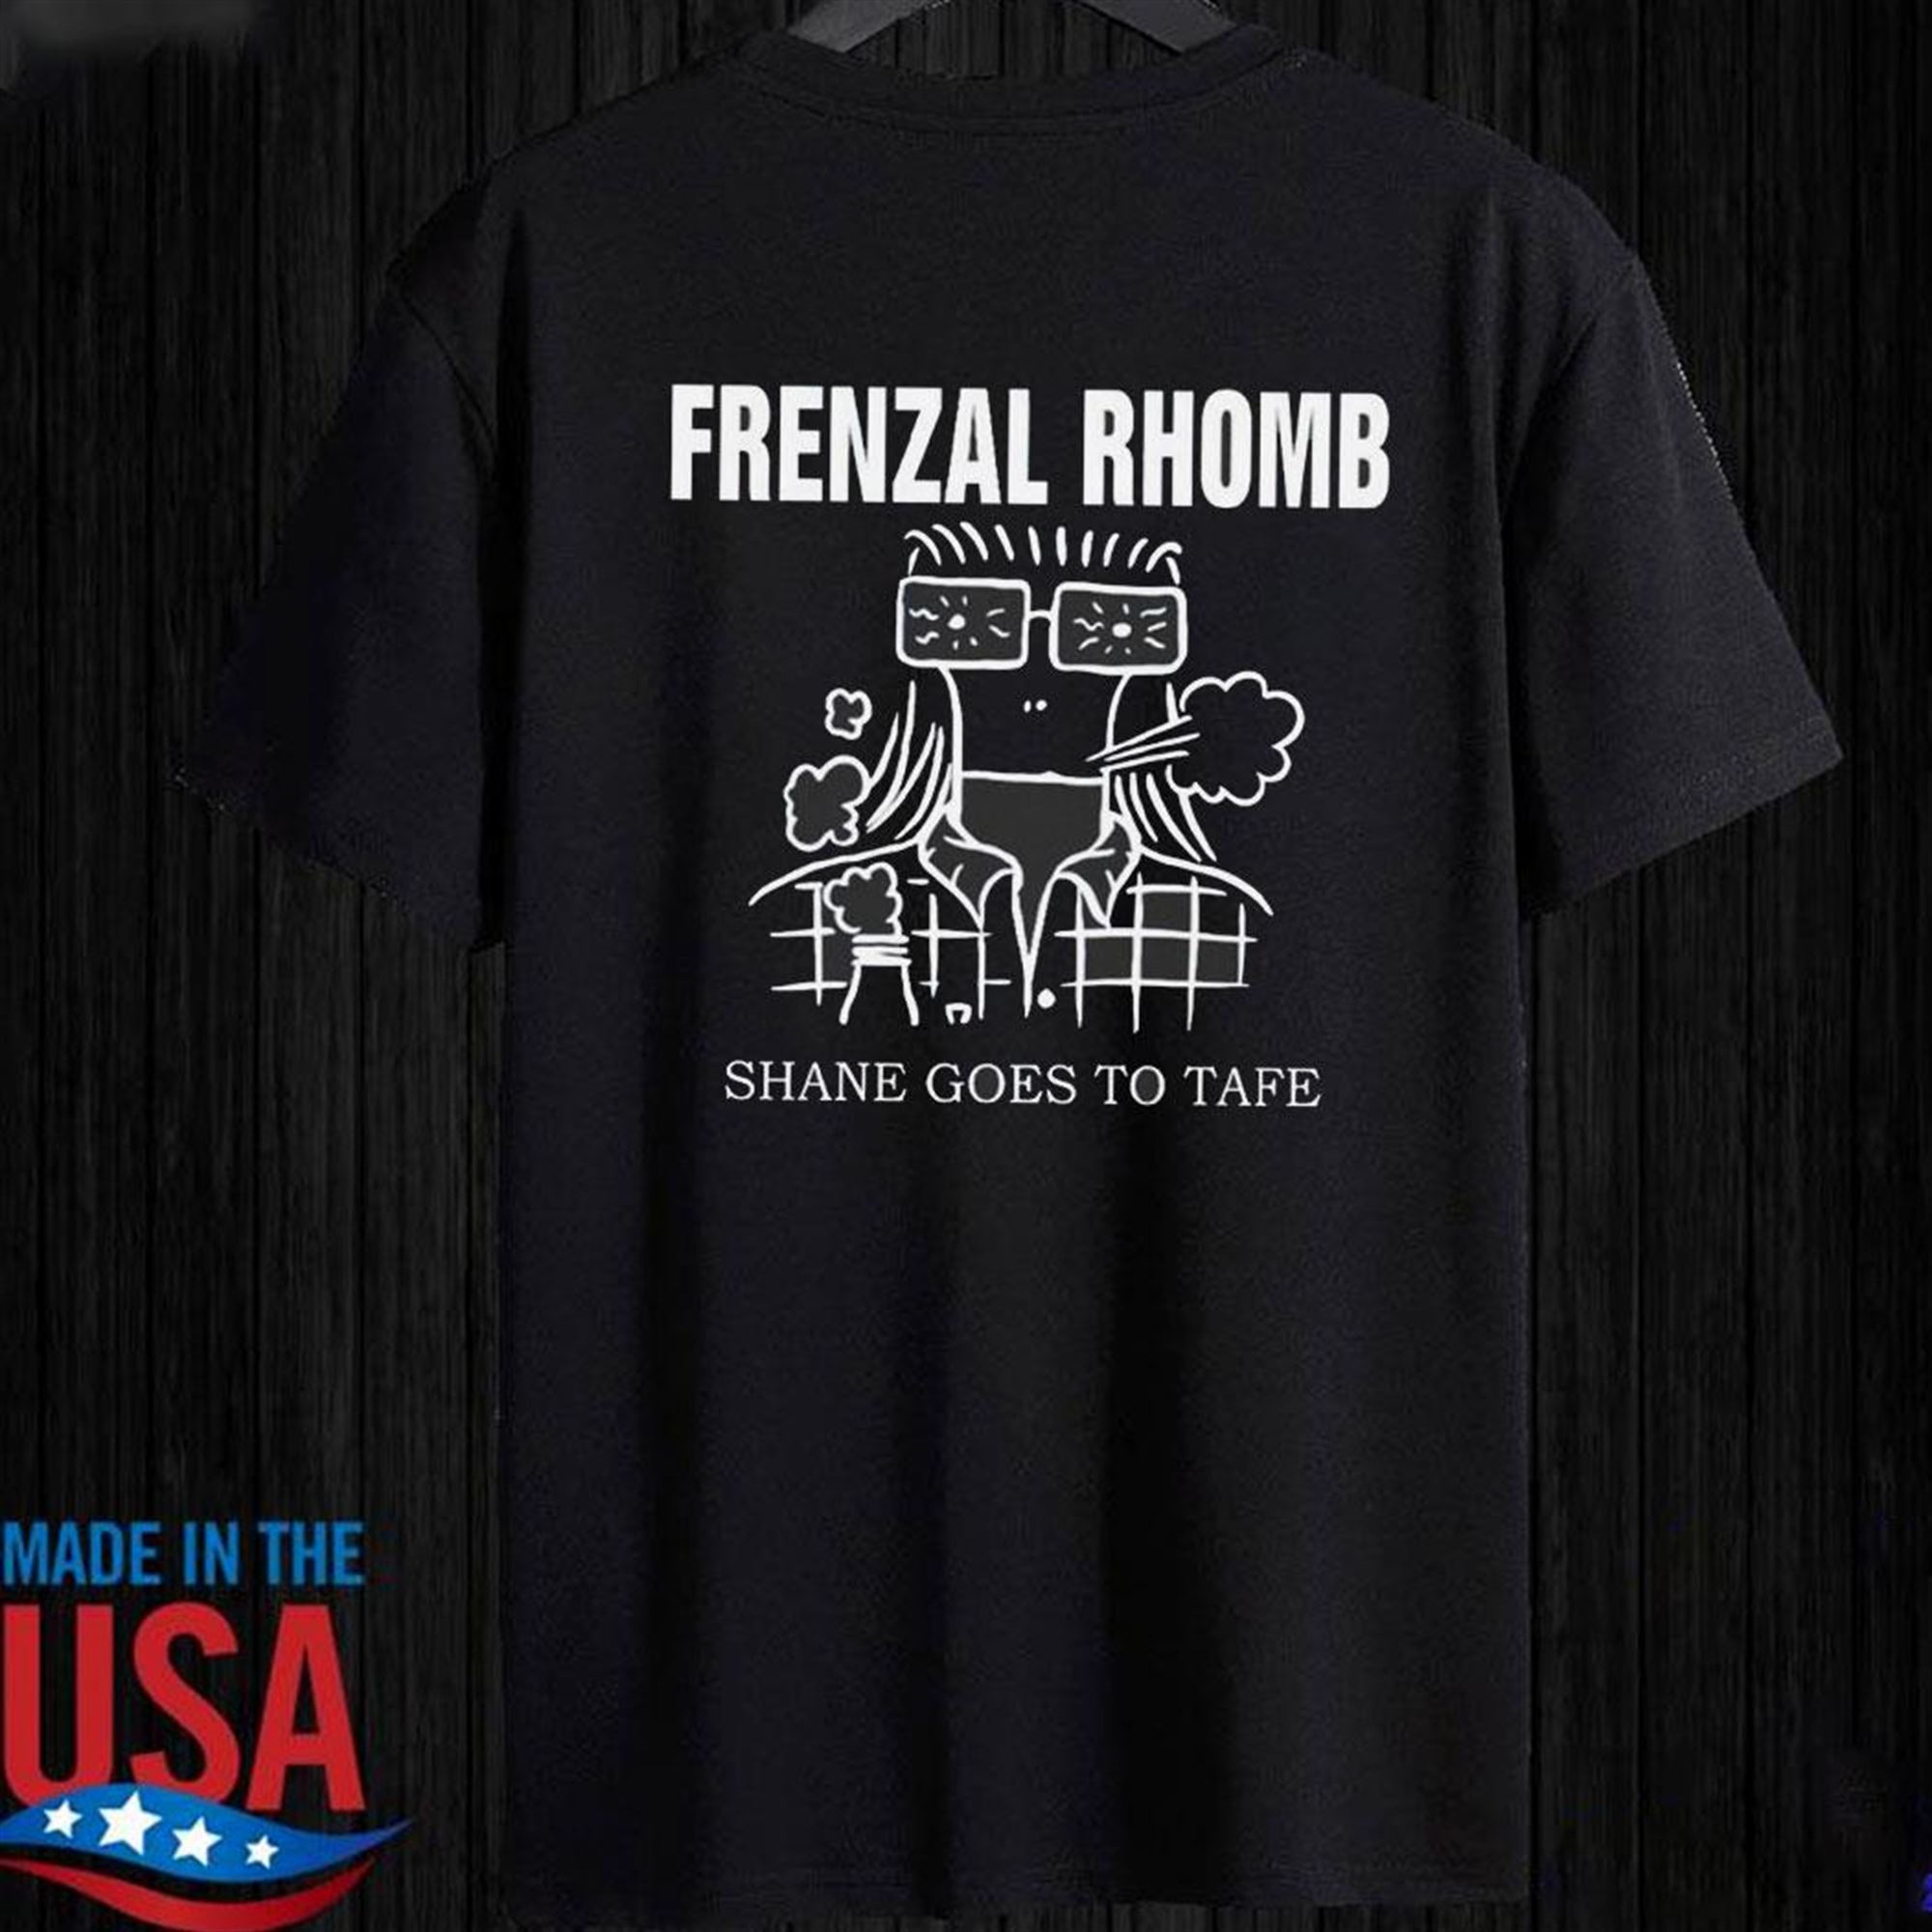 Frenzal Rhomb Shane Goes To Tafe T-shirt